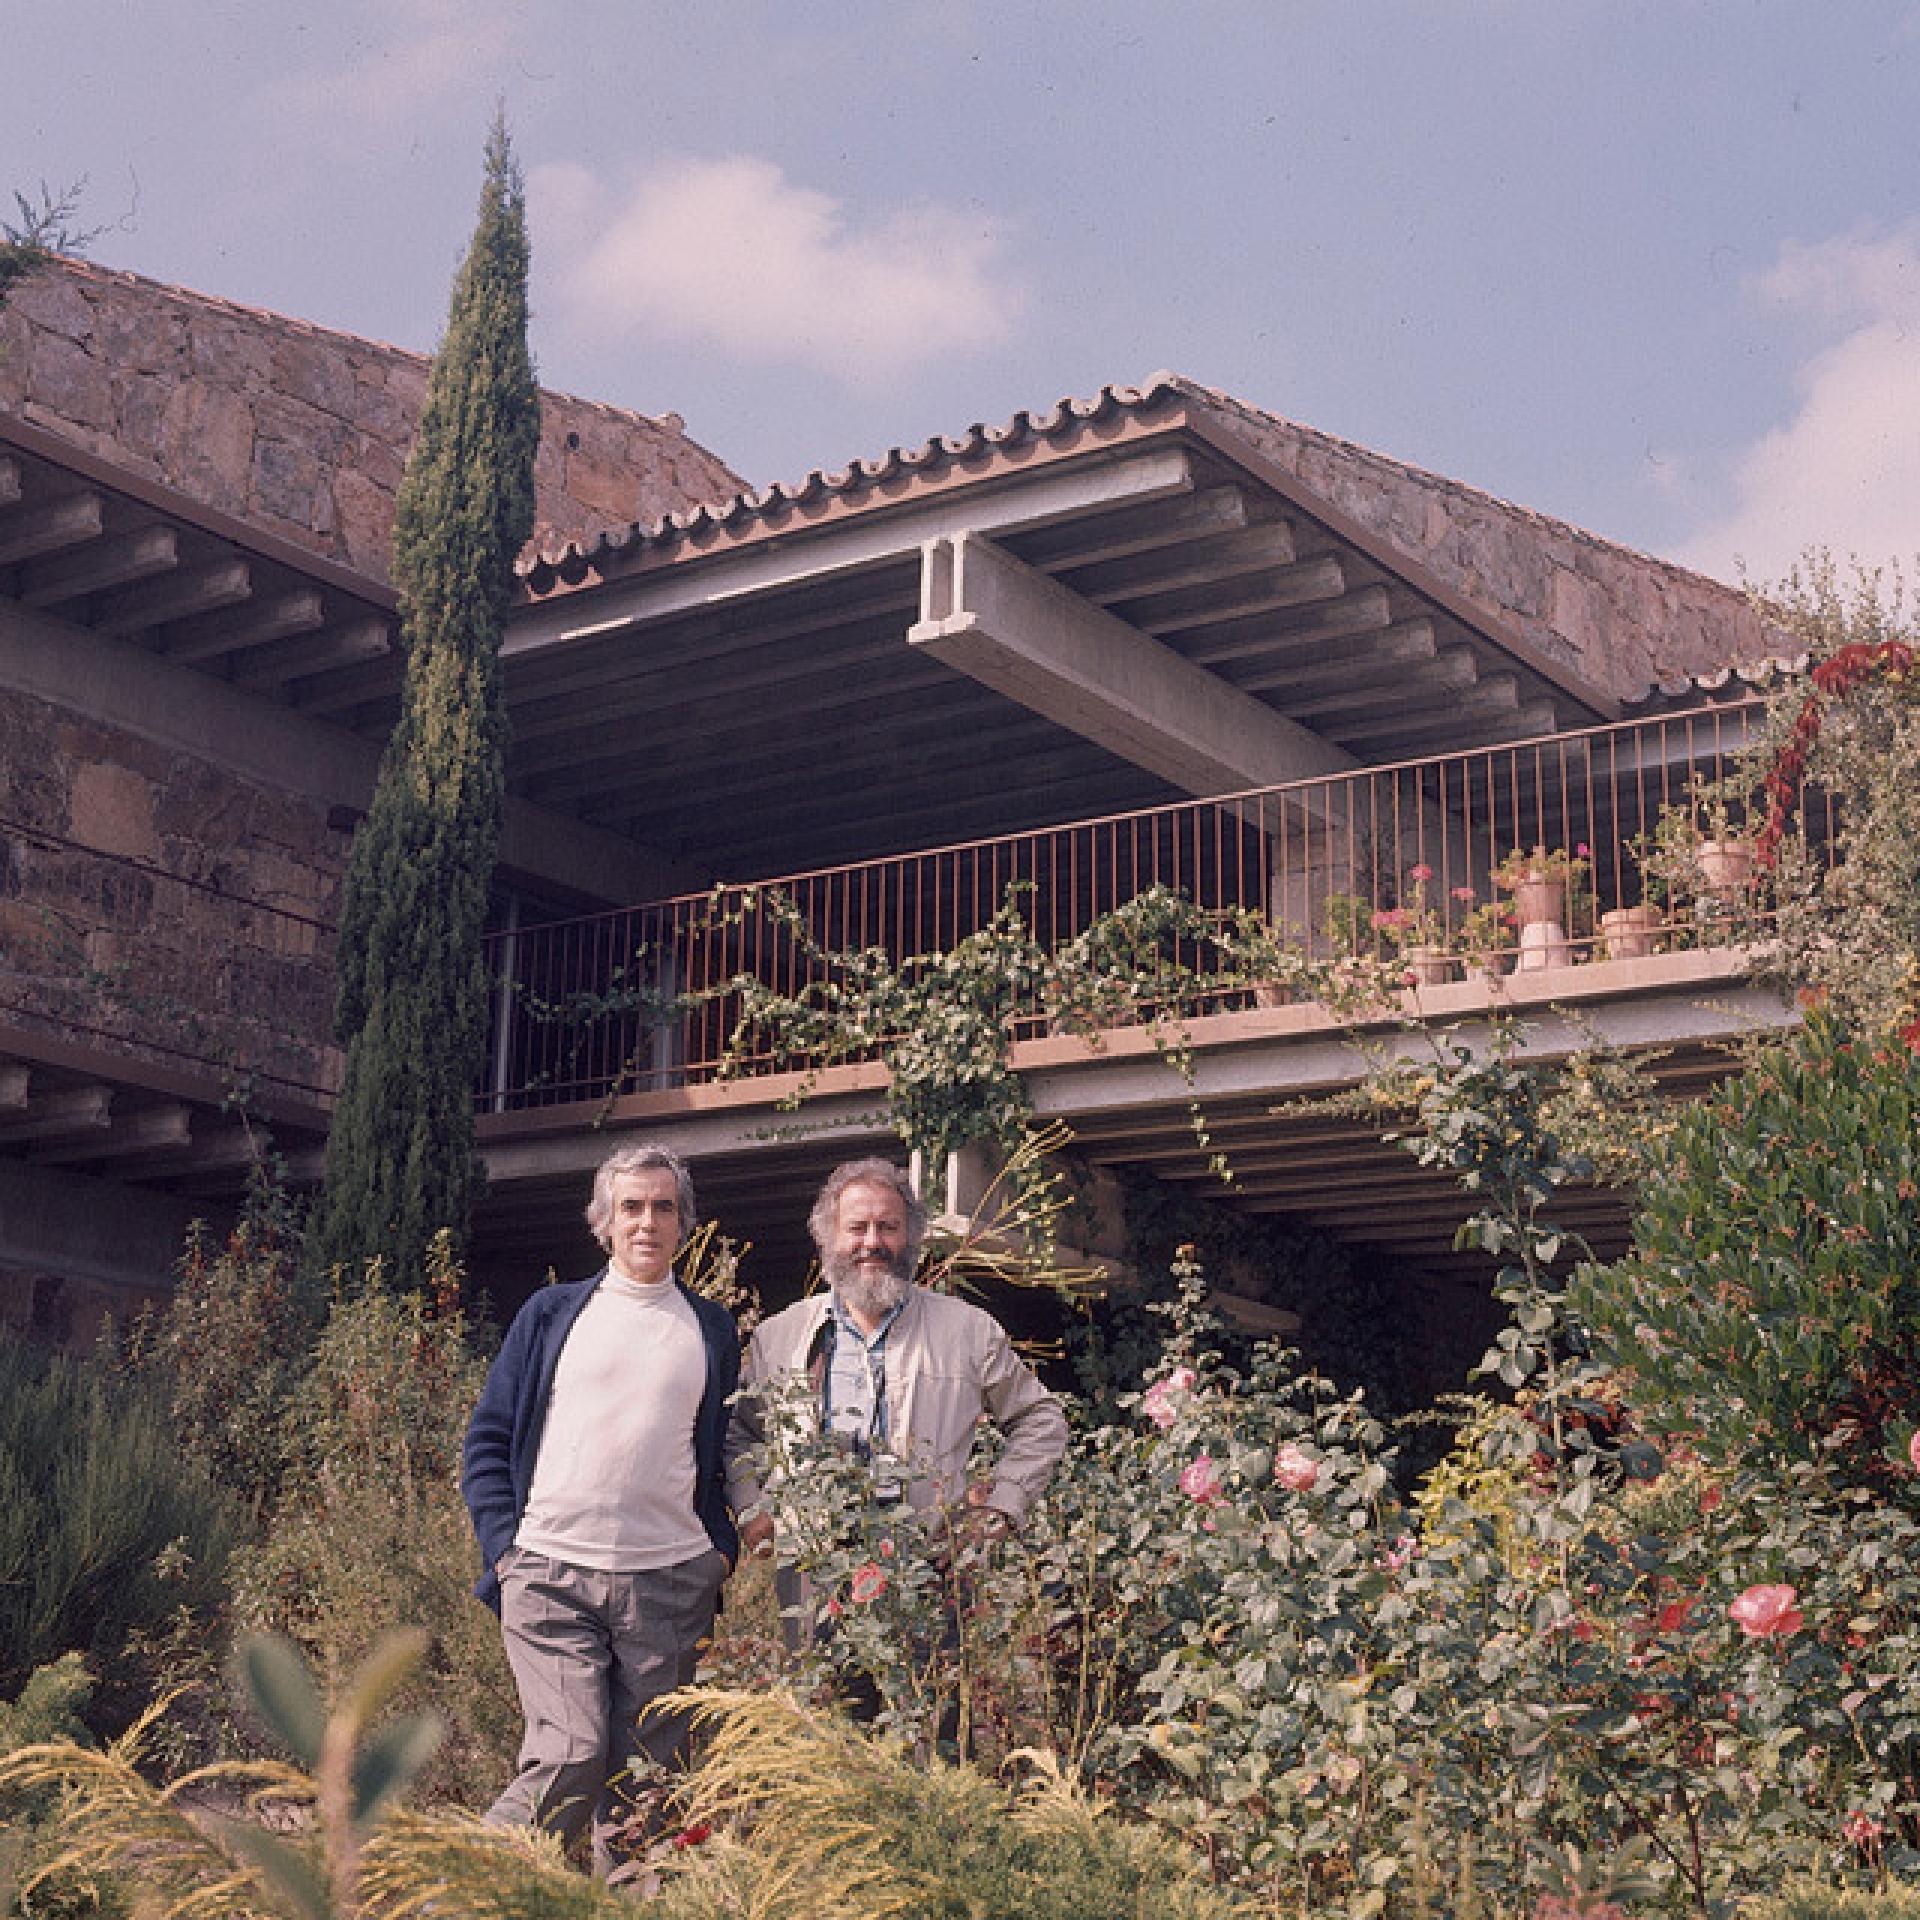 Structure | Manuel López House in Torrelodones (1966) by Fernando Higueras.